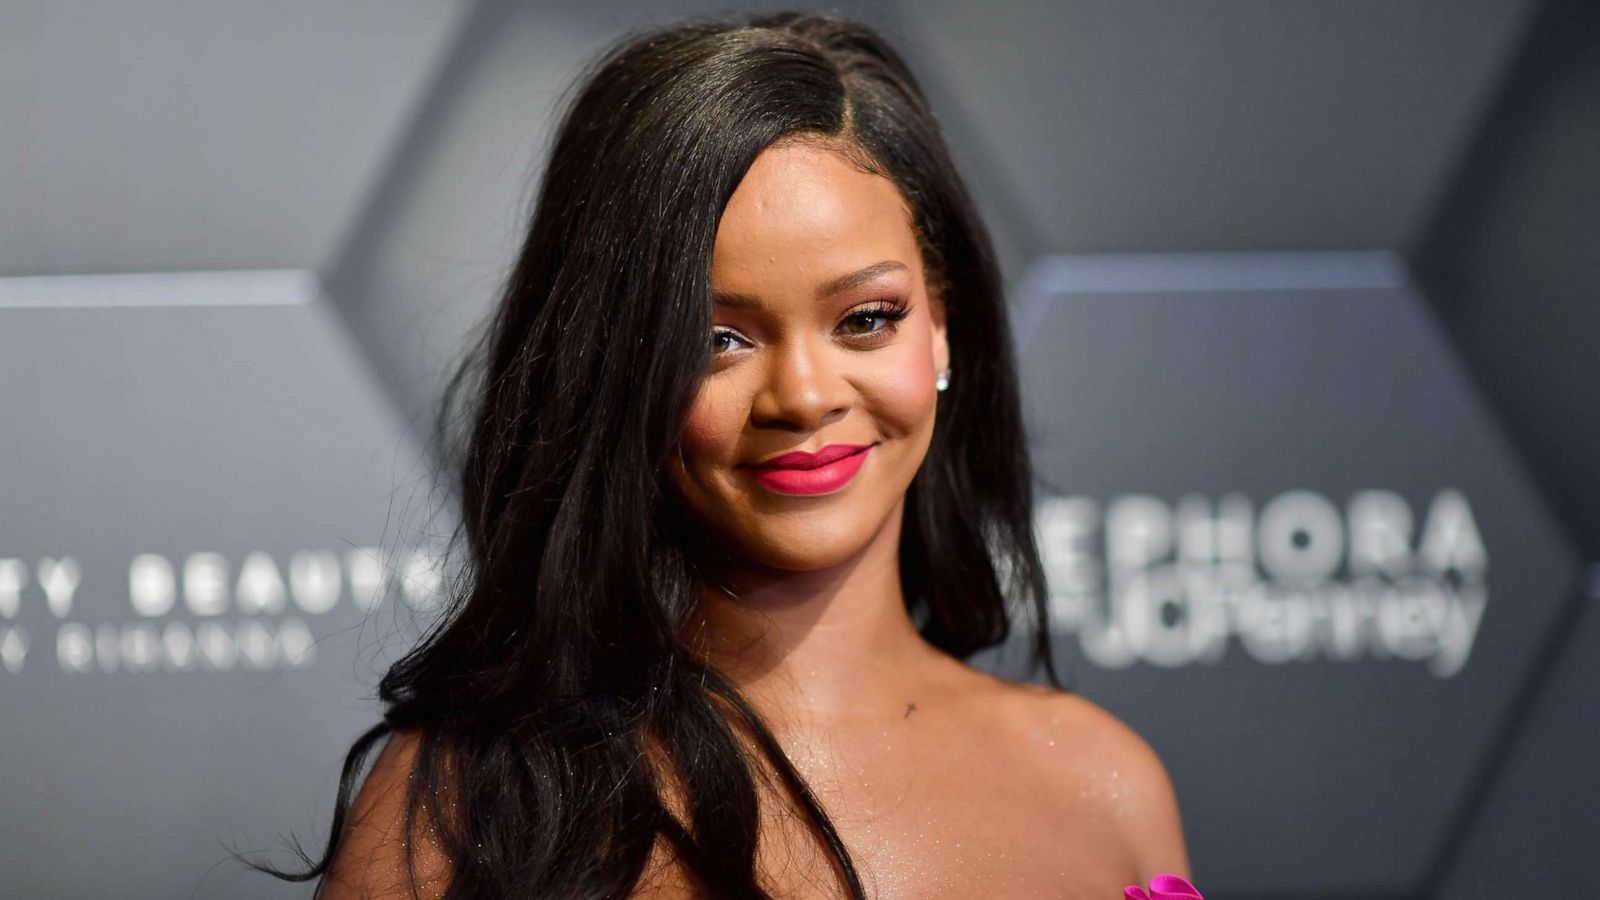 Rihanna to perform during 2023 Super Bowl halftime show - Good